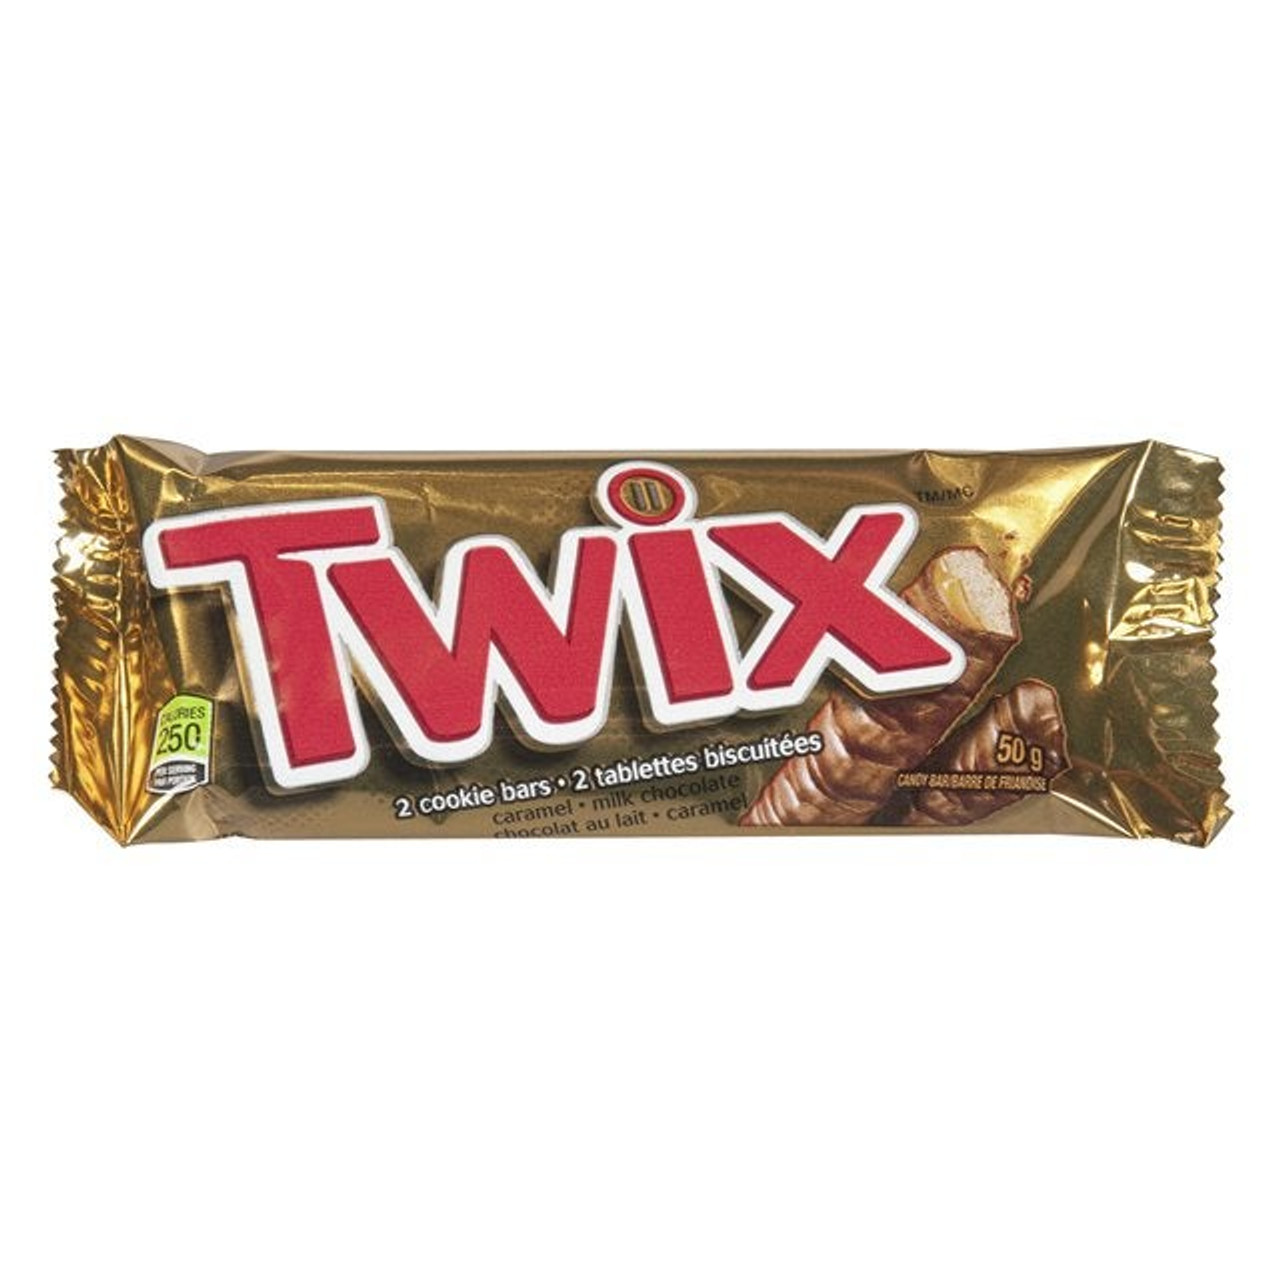 TWIX Twix Chocolate Bars